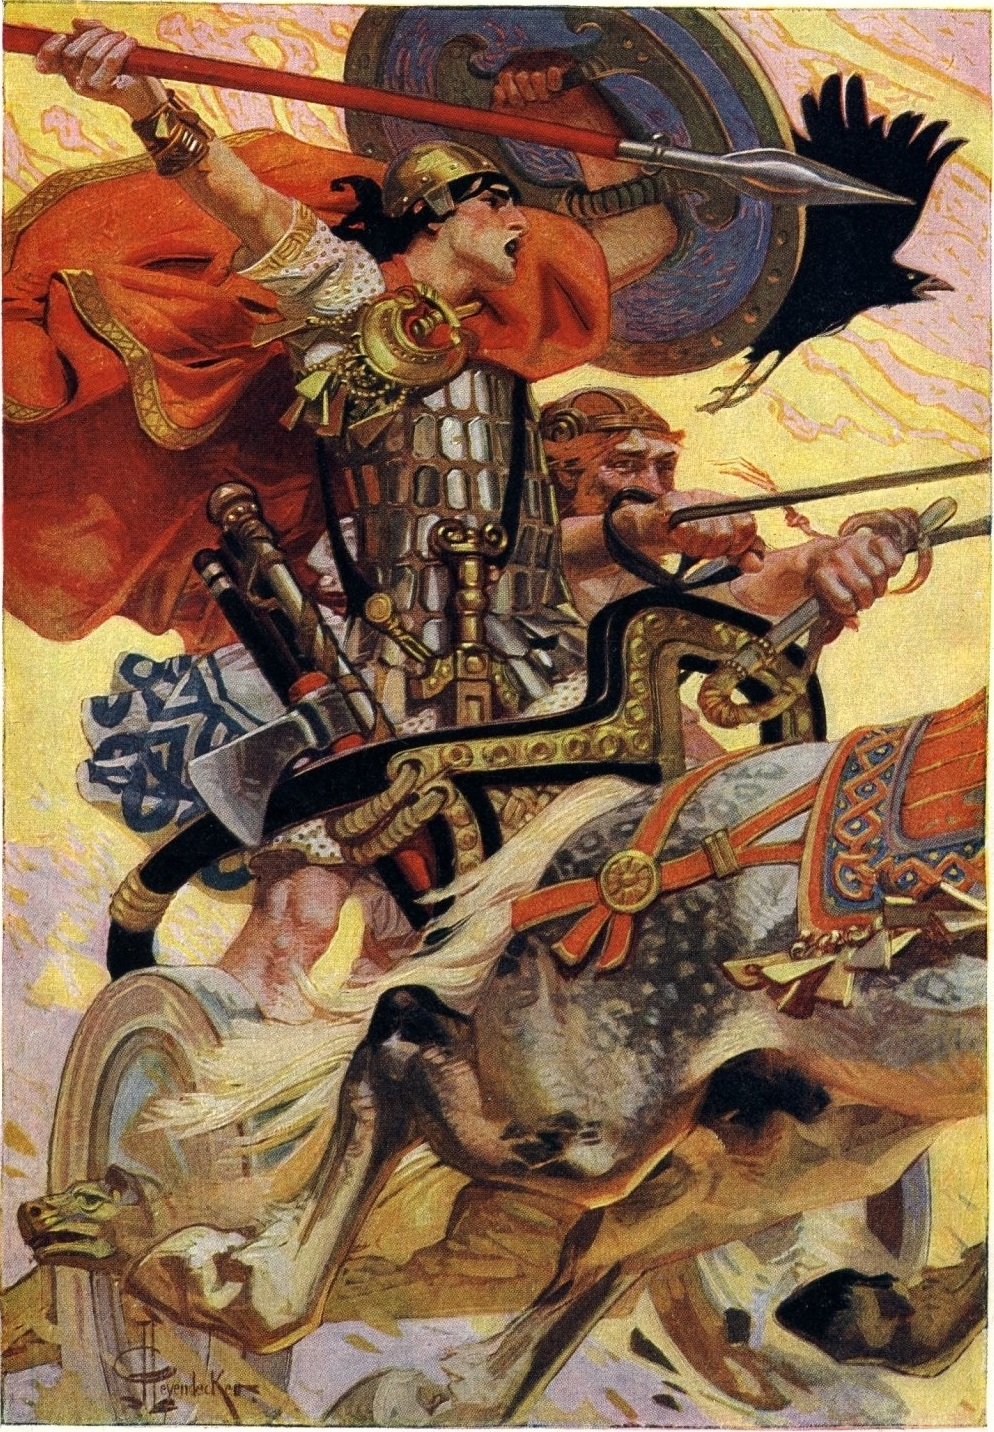 An image of the mythic Irish warrior Cuchulain in battle.